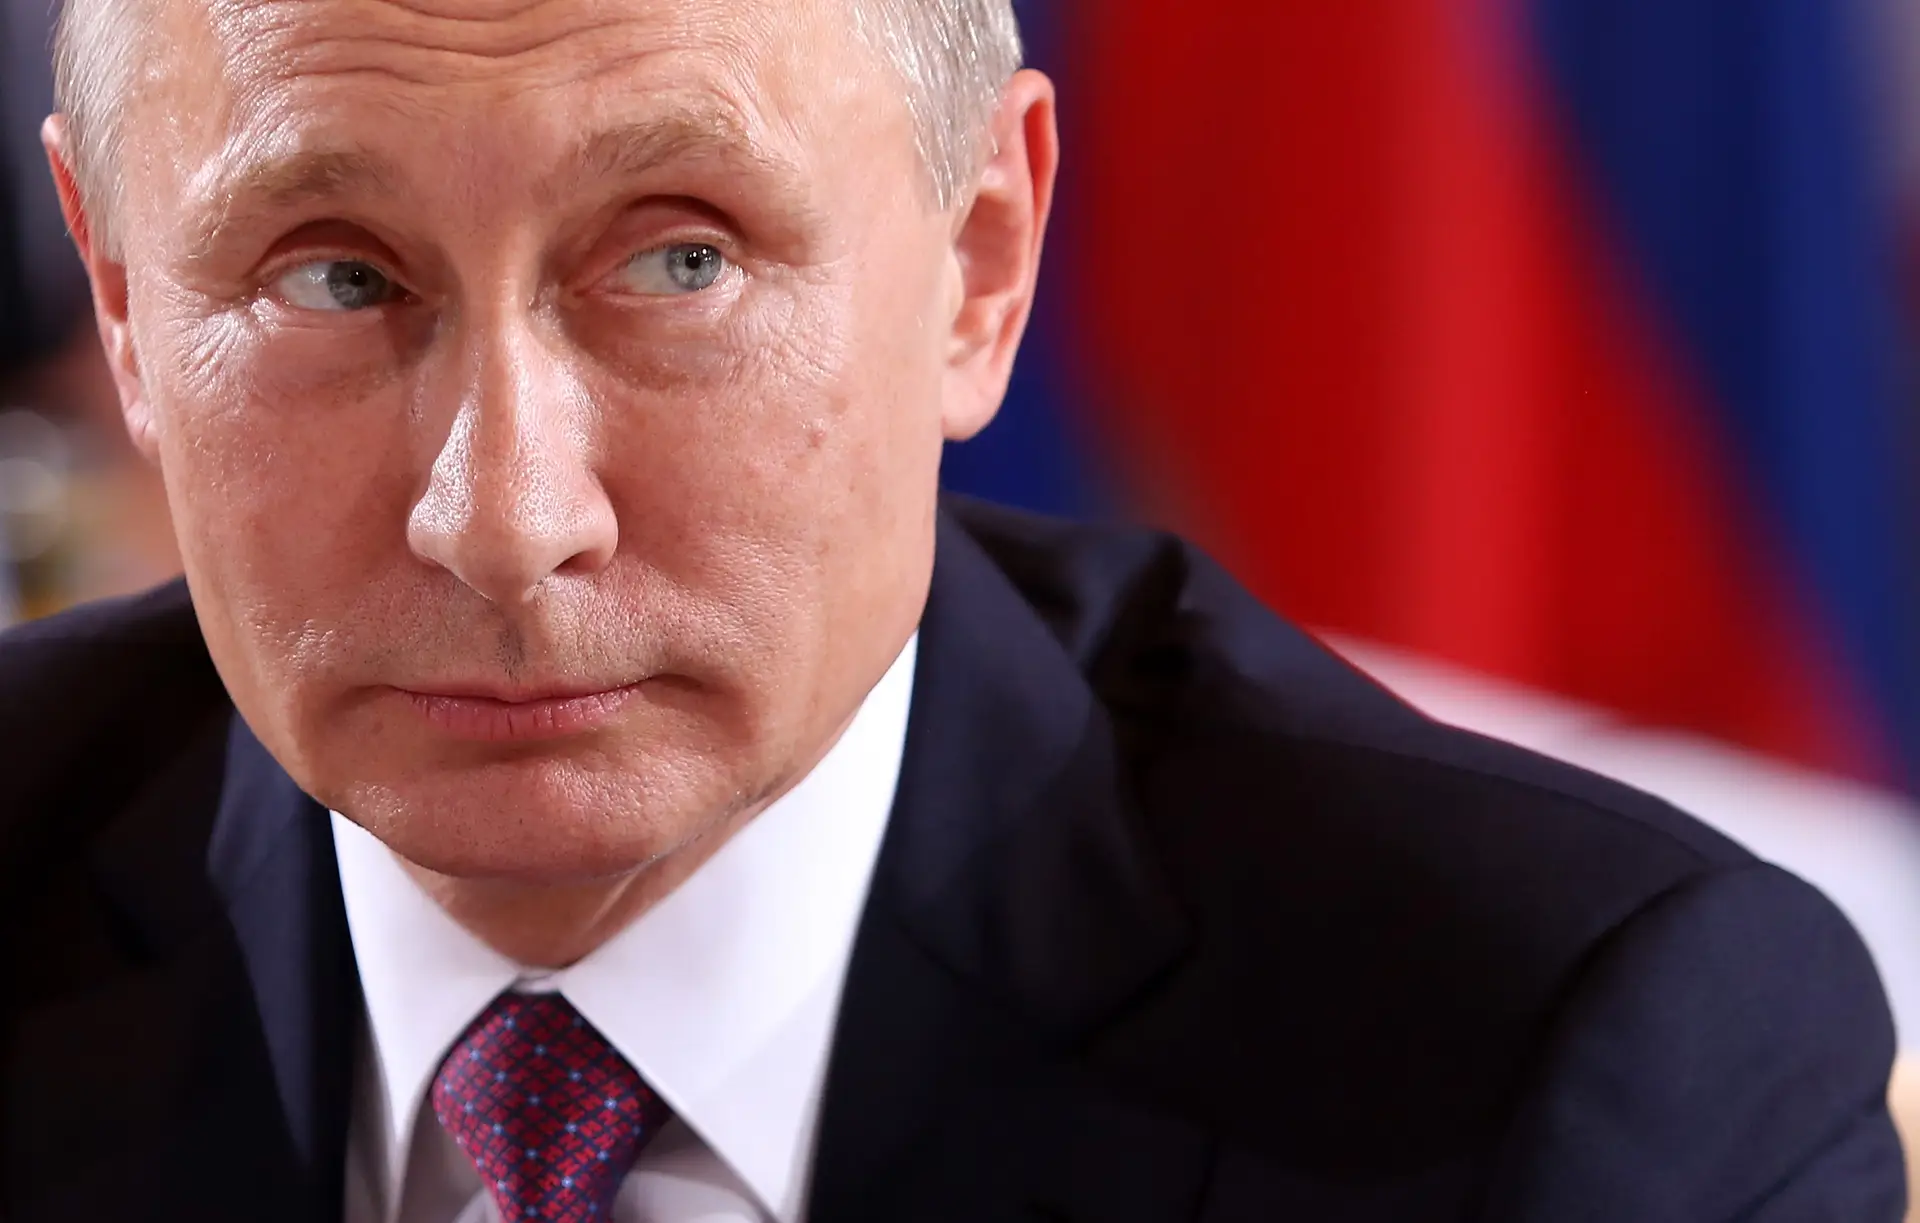 NATO  tem de "fazer mais" contra "delírios de grandeza" de Putin